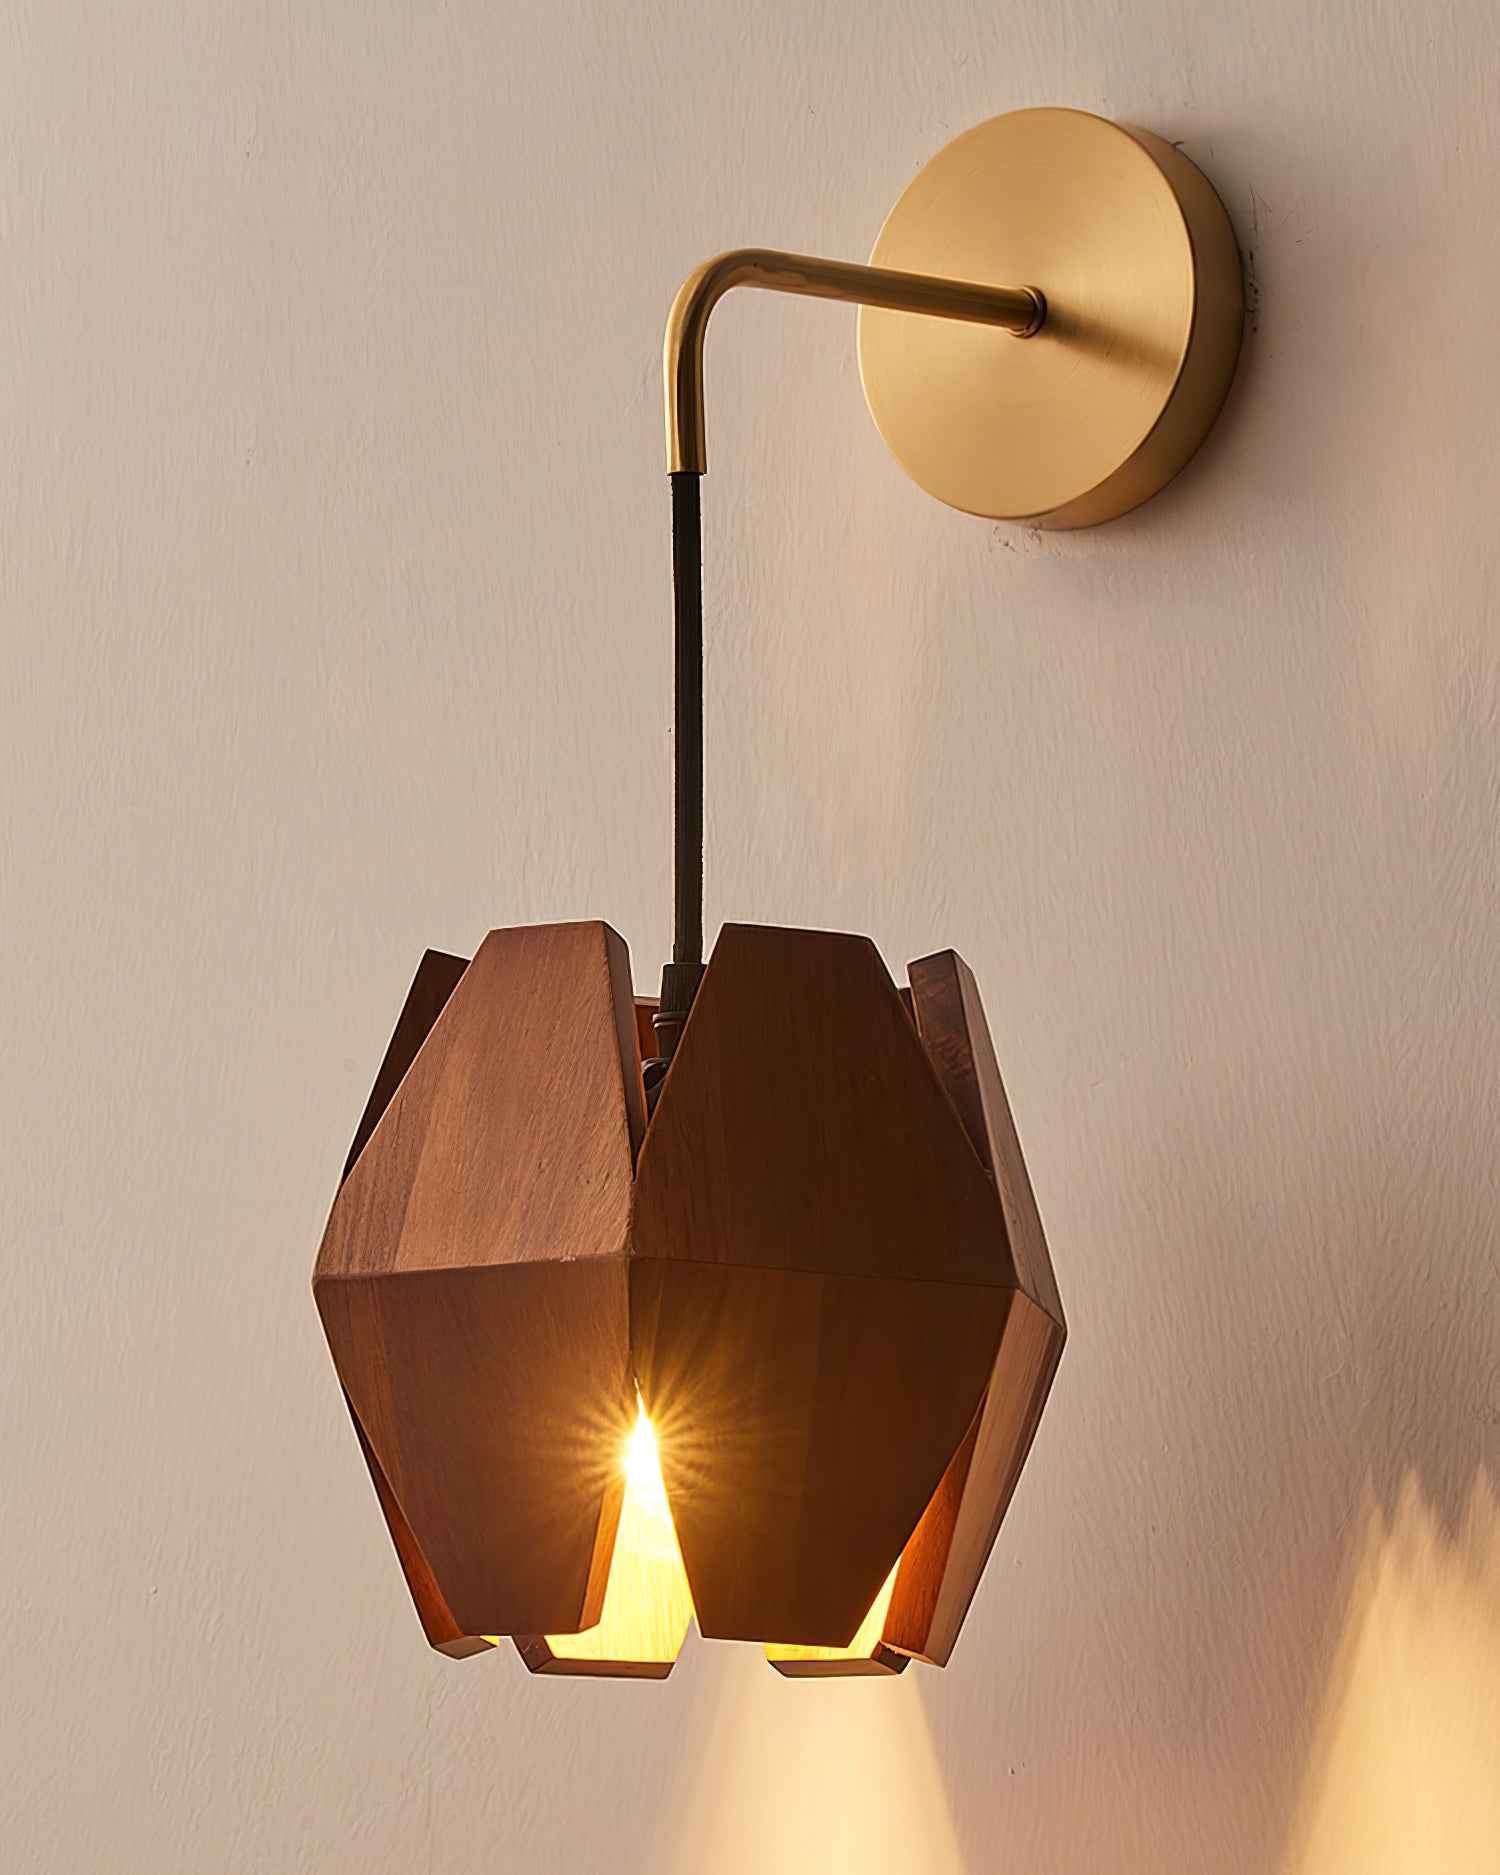 Wood Astris Plug In Wall Lamp